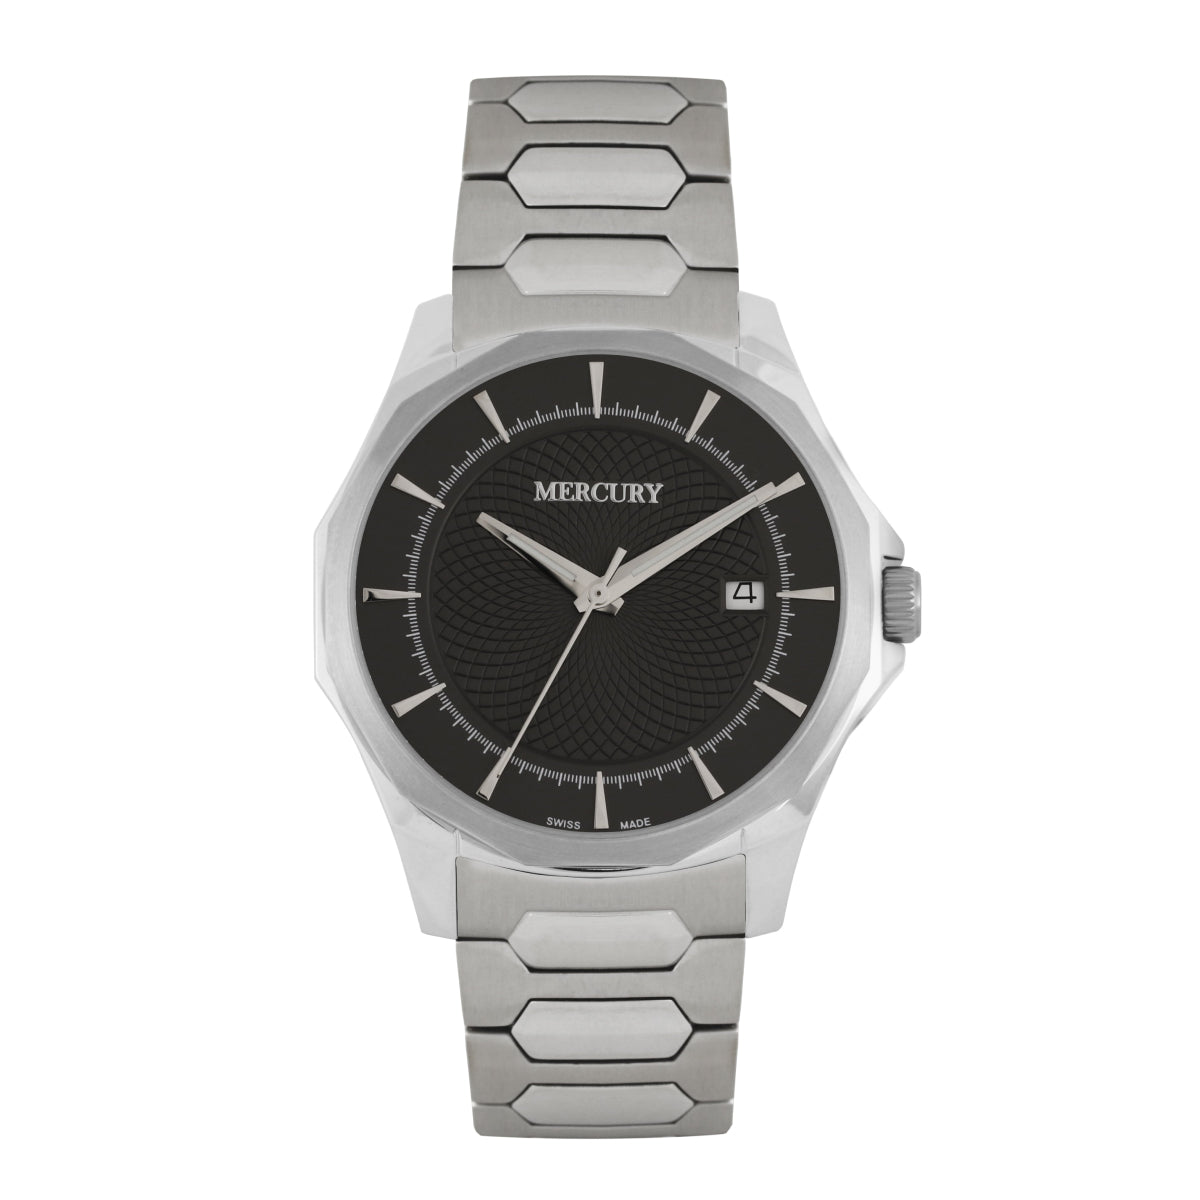 Mercury Men's Swiss Quartz Watch with Black Dial - MER-0047